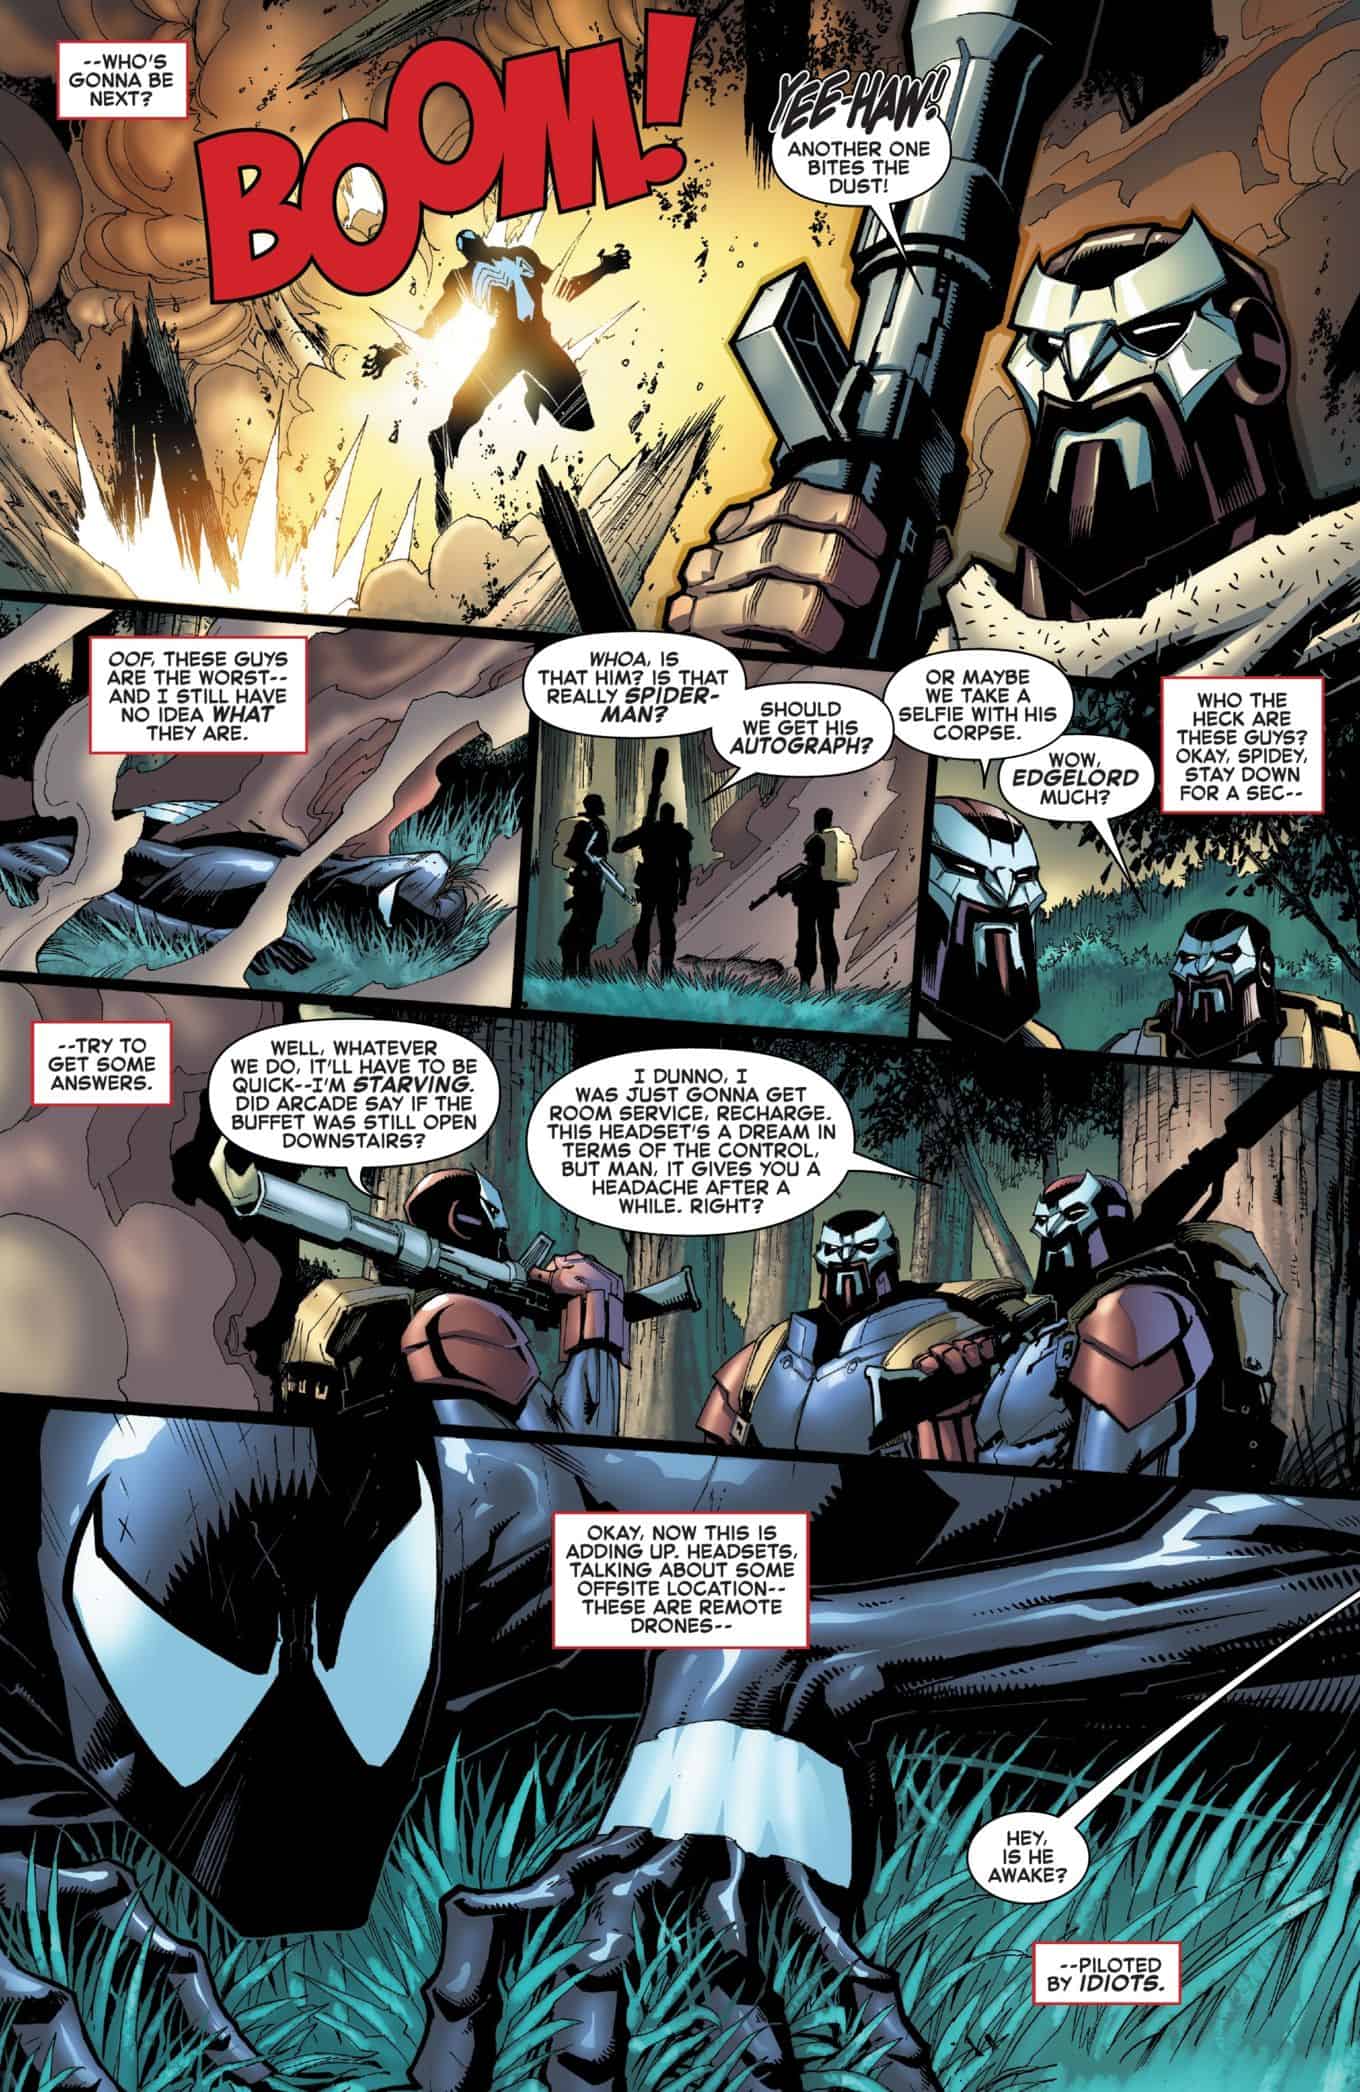 Marvel Comics Universe & Amazing Spider-Man #19 Spoilers: Kraven The